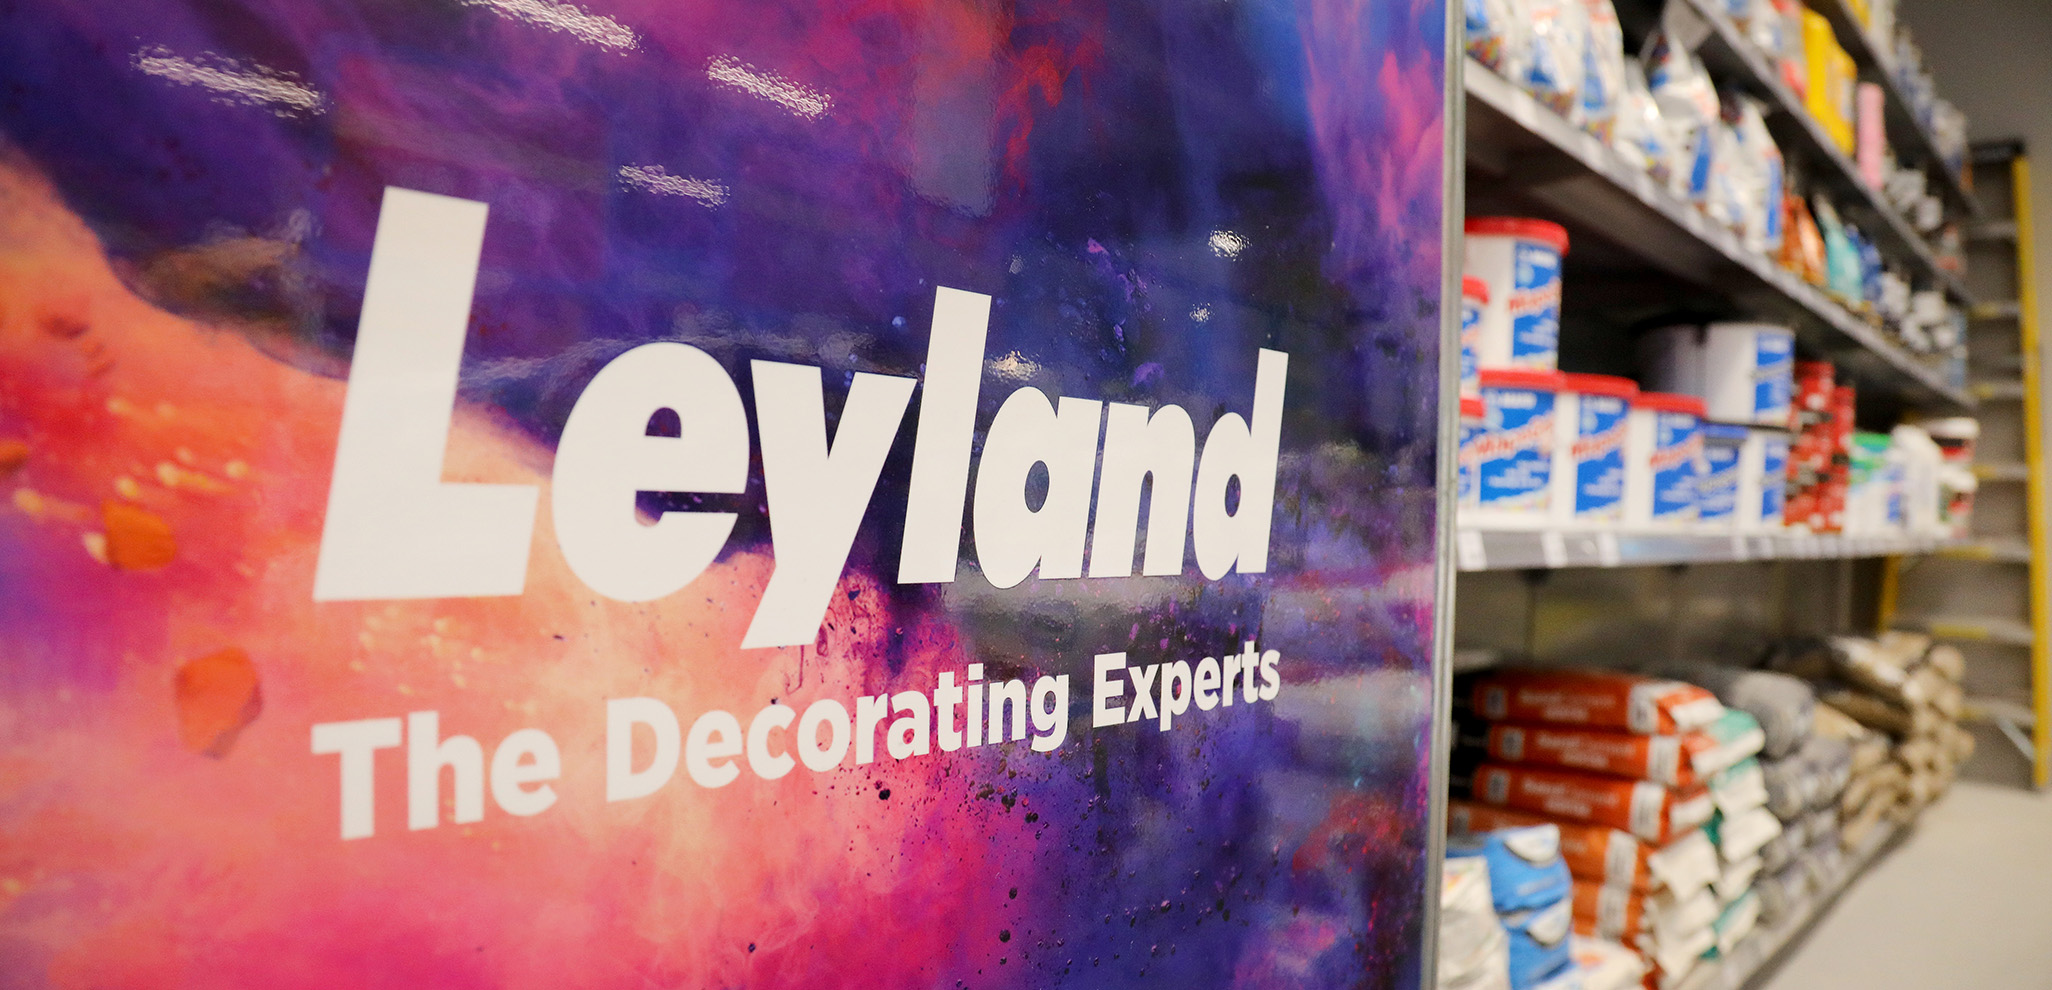 Leyland The Decorating Experts